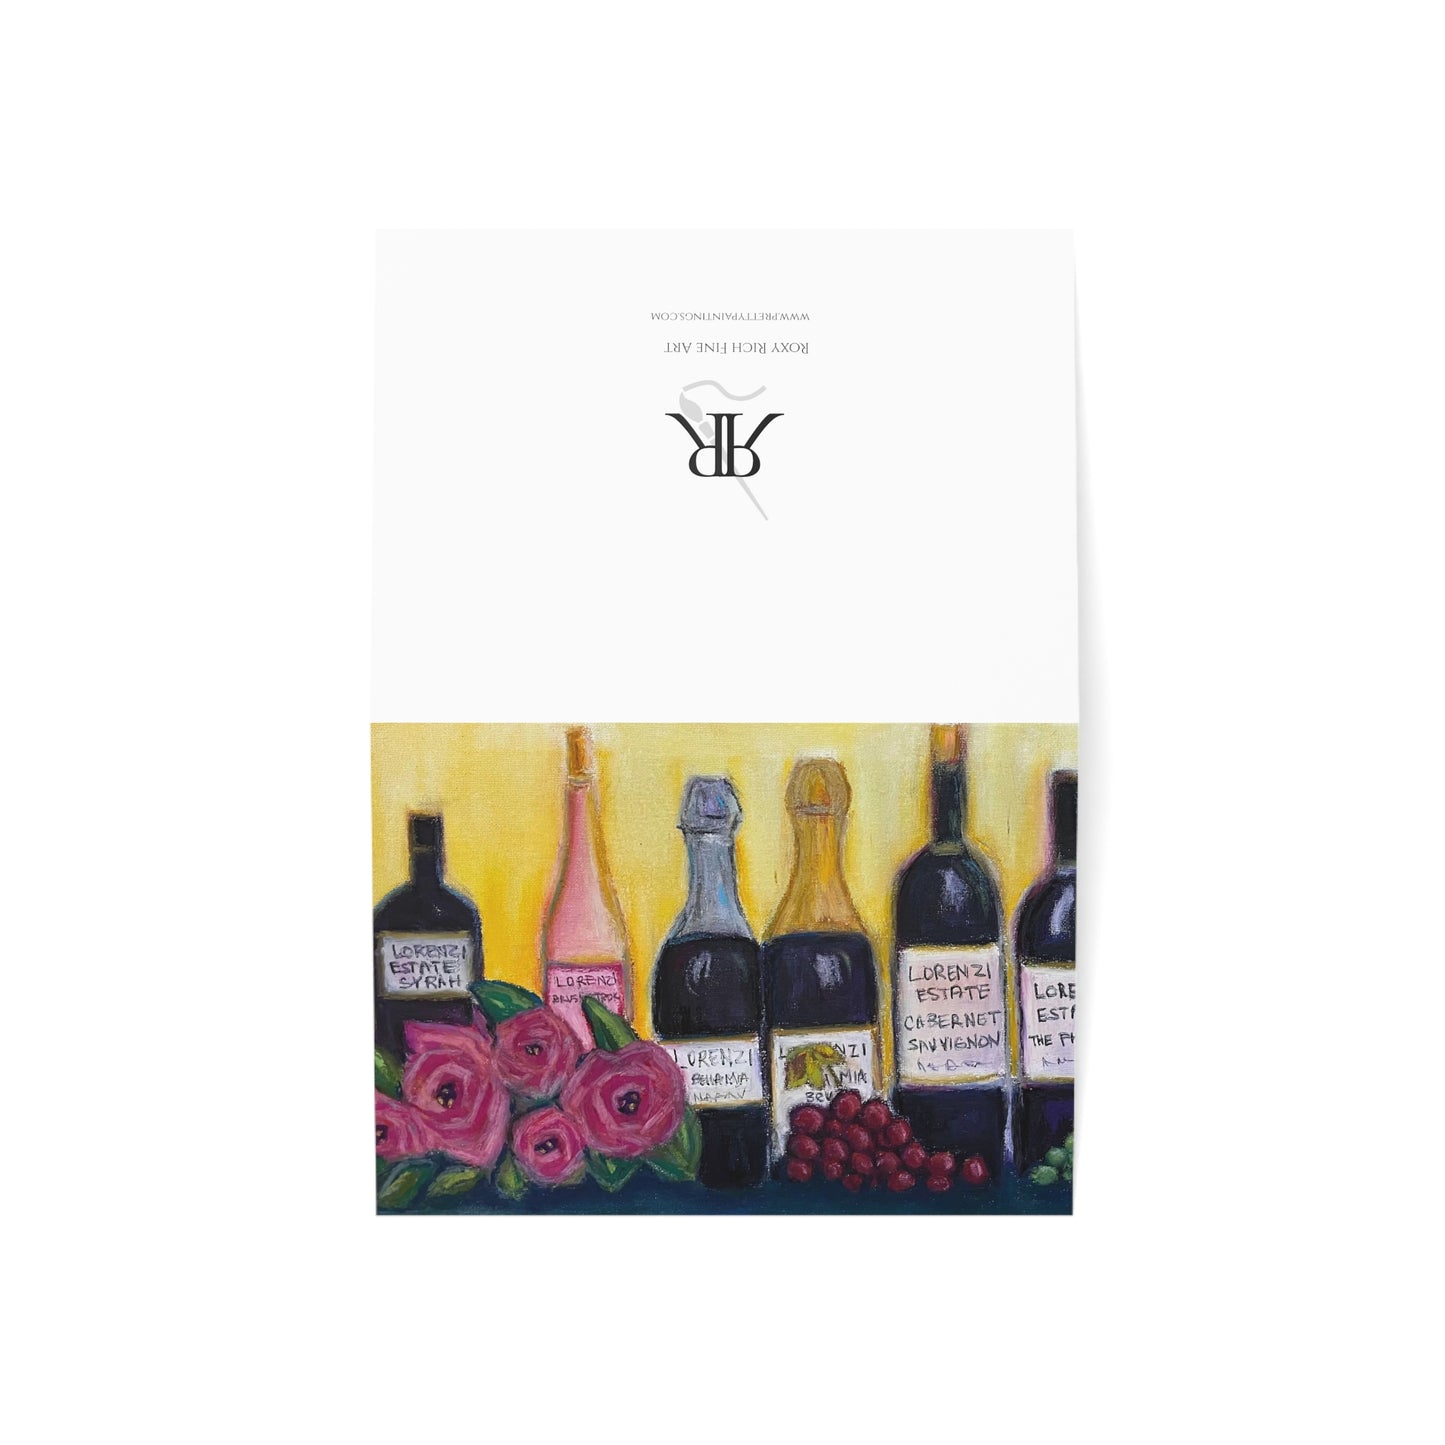 Lorenzi Estate Wine & Roses Greeting Cards